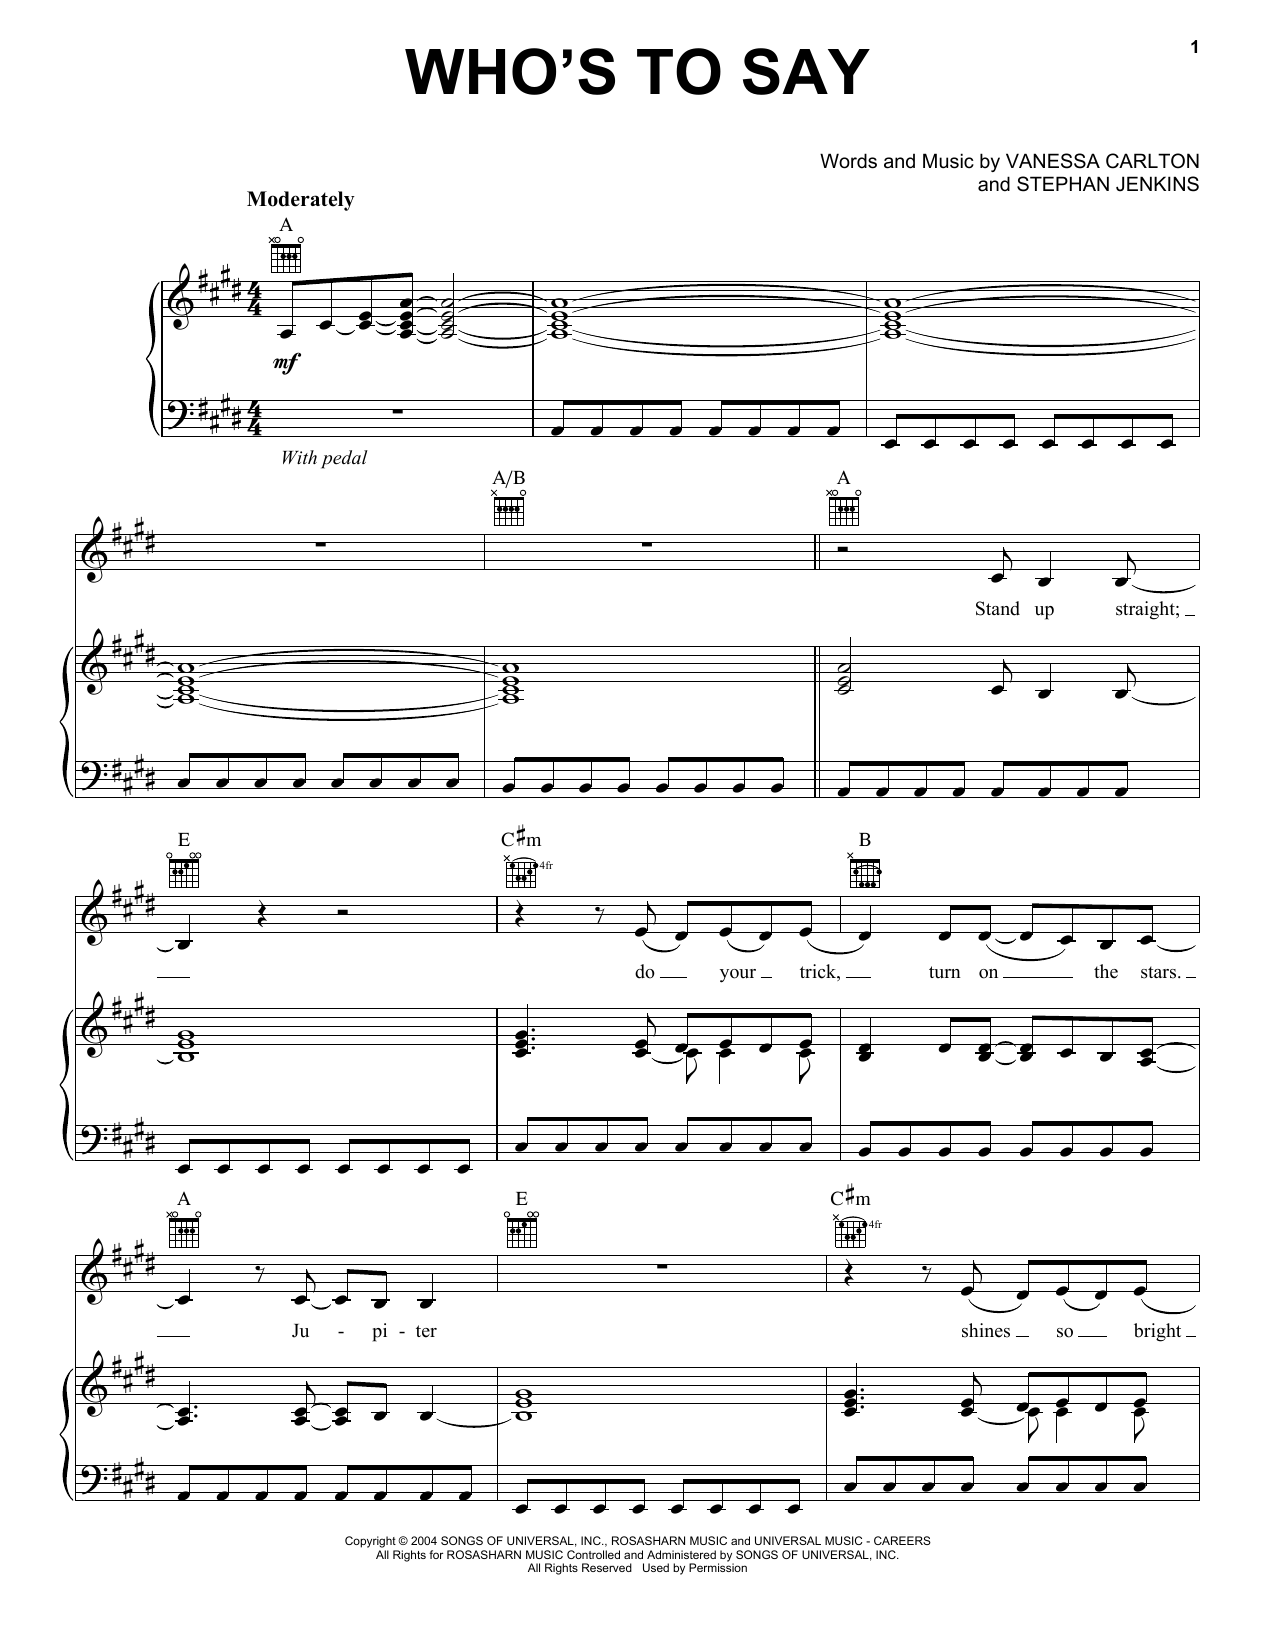 Vanessa Carlton Who's To Say sheet music notes and chords. Download Printable PDF.